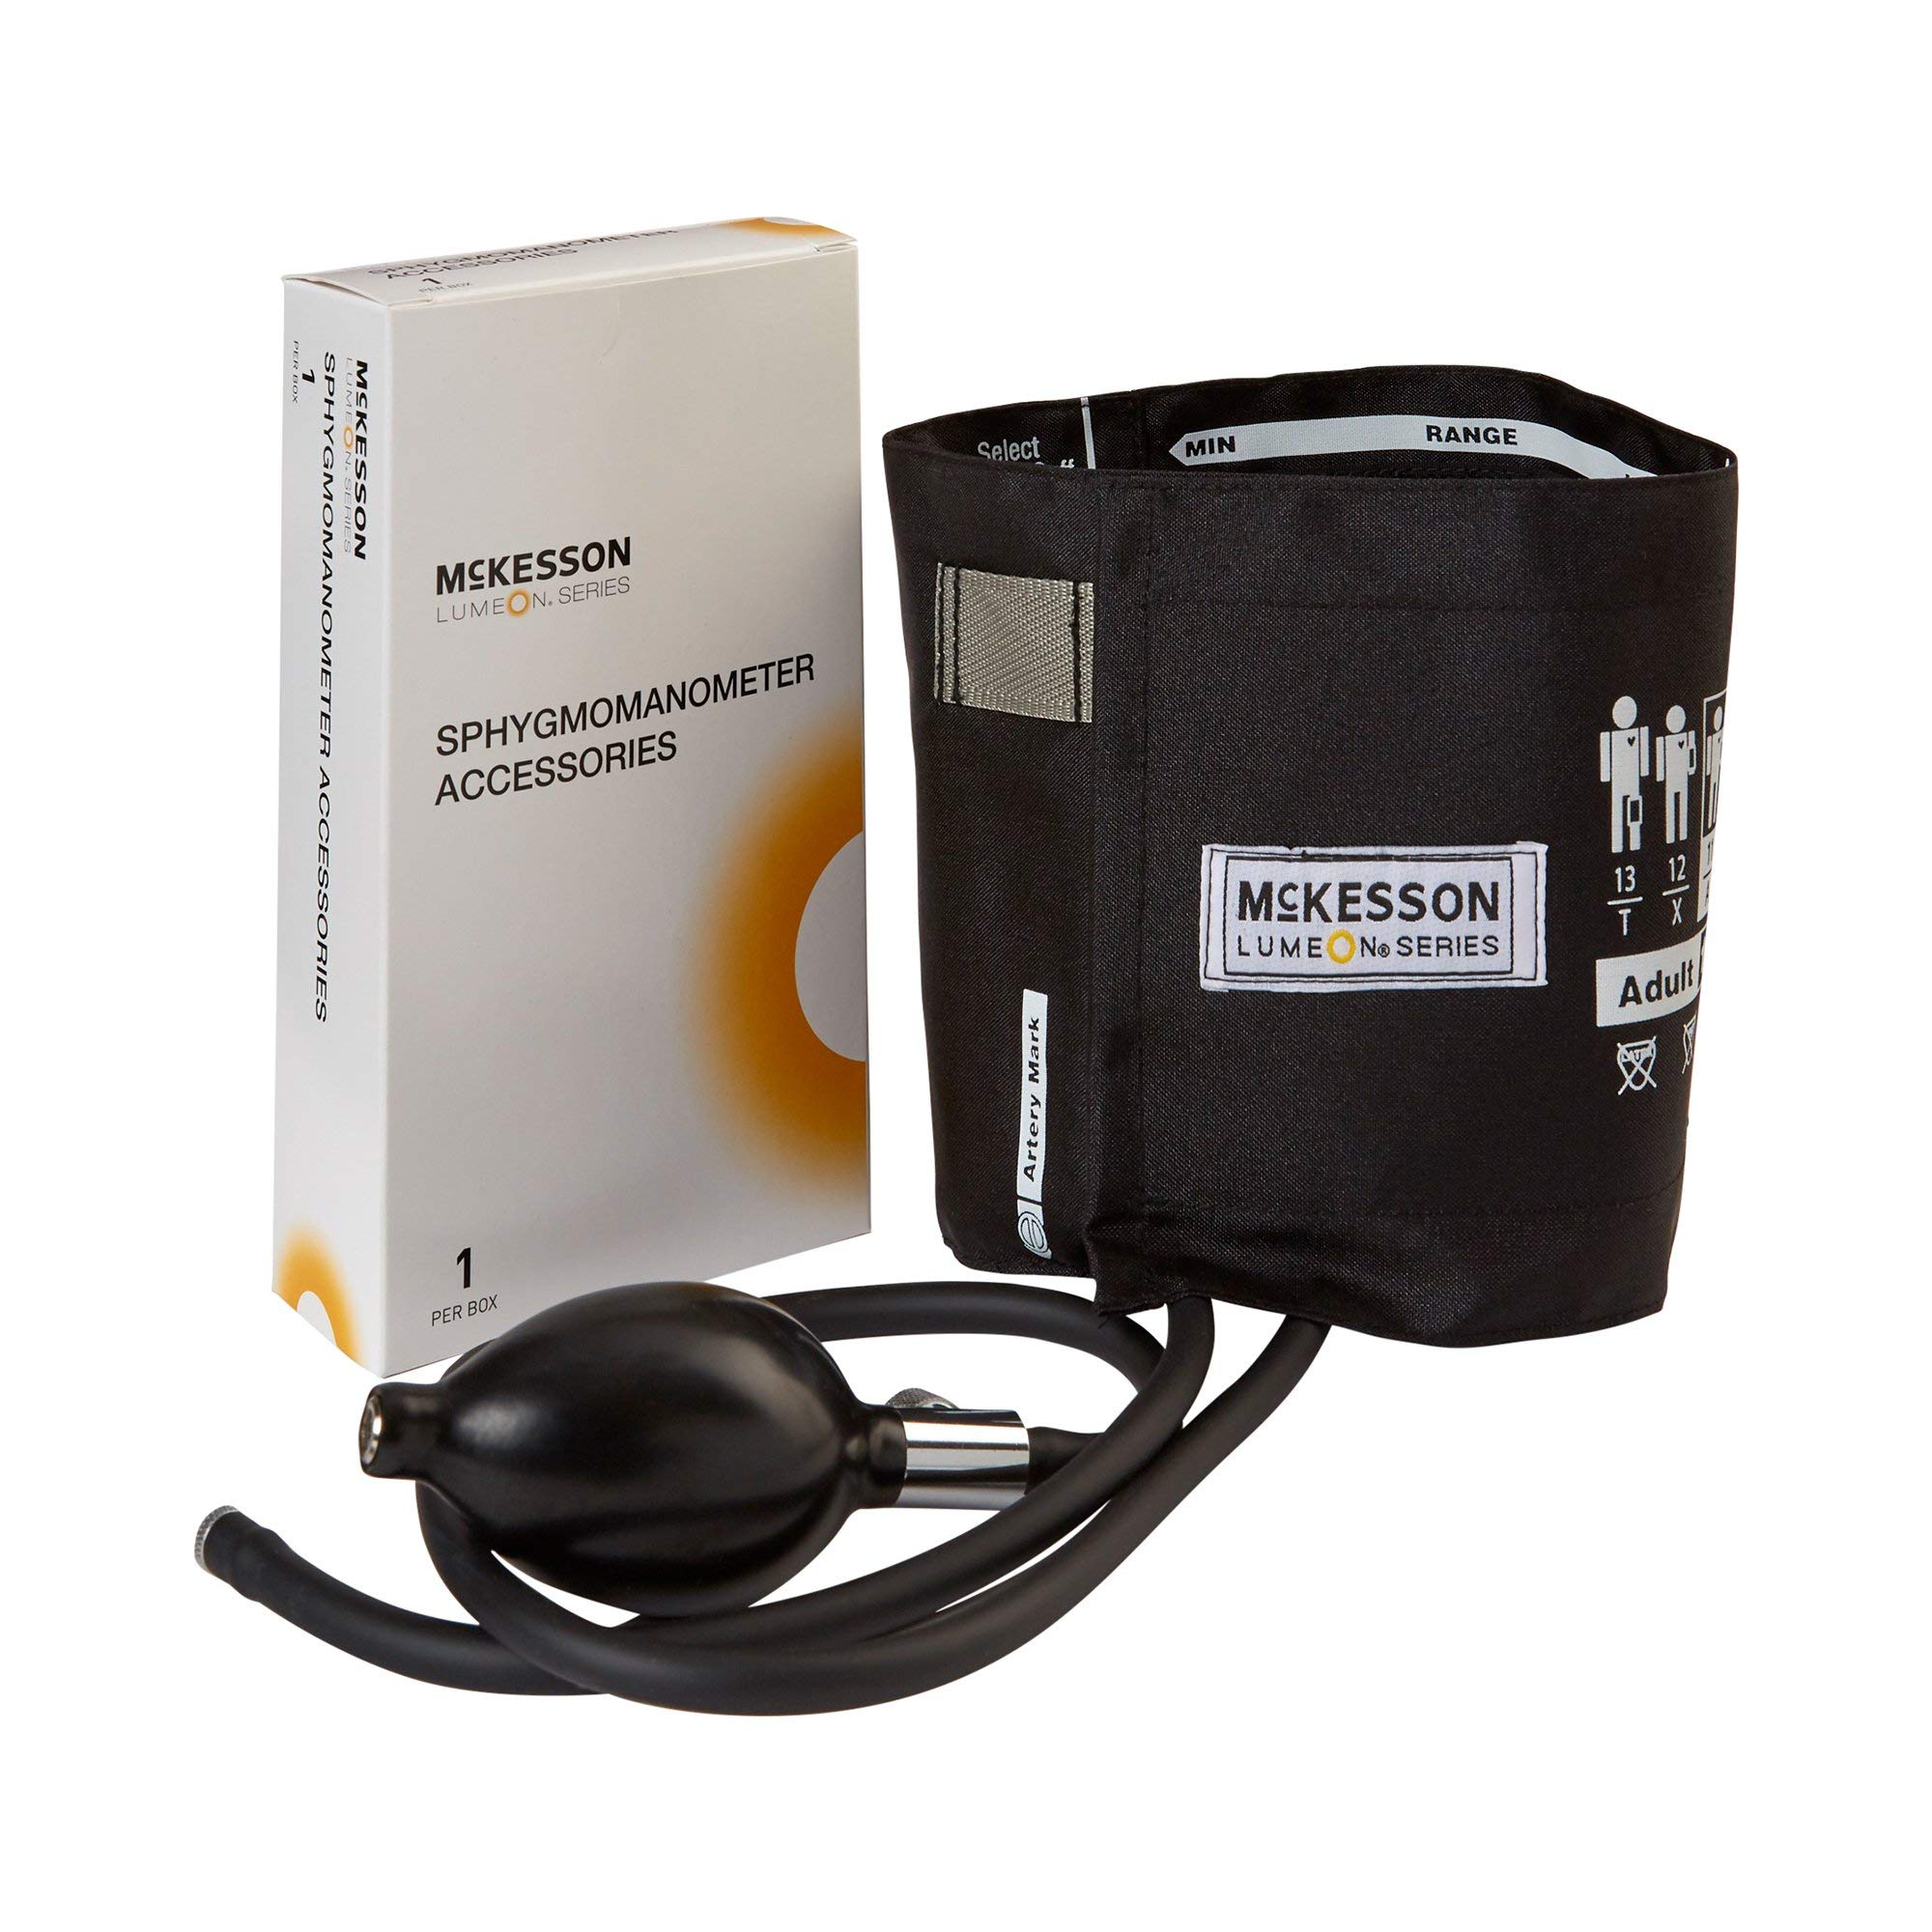 McKesson Digital Arm Blood Pressure Monitor